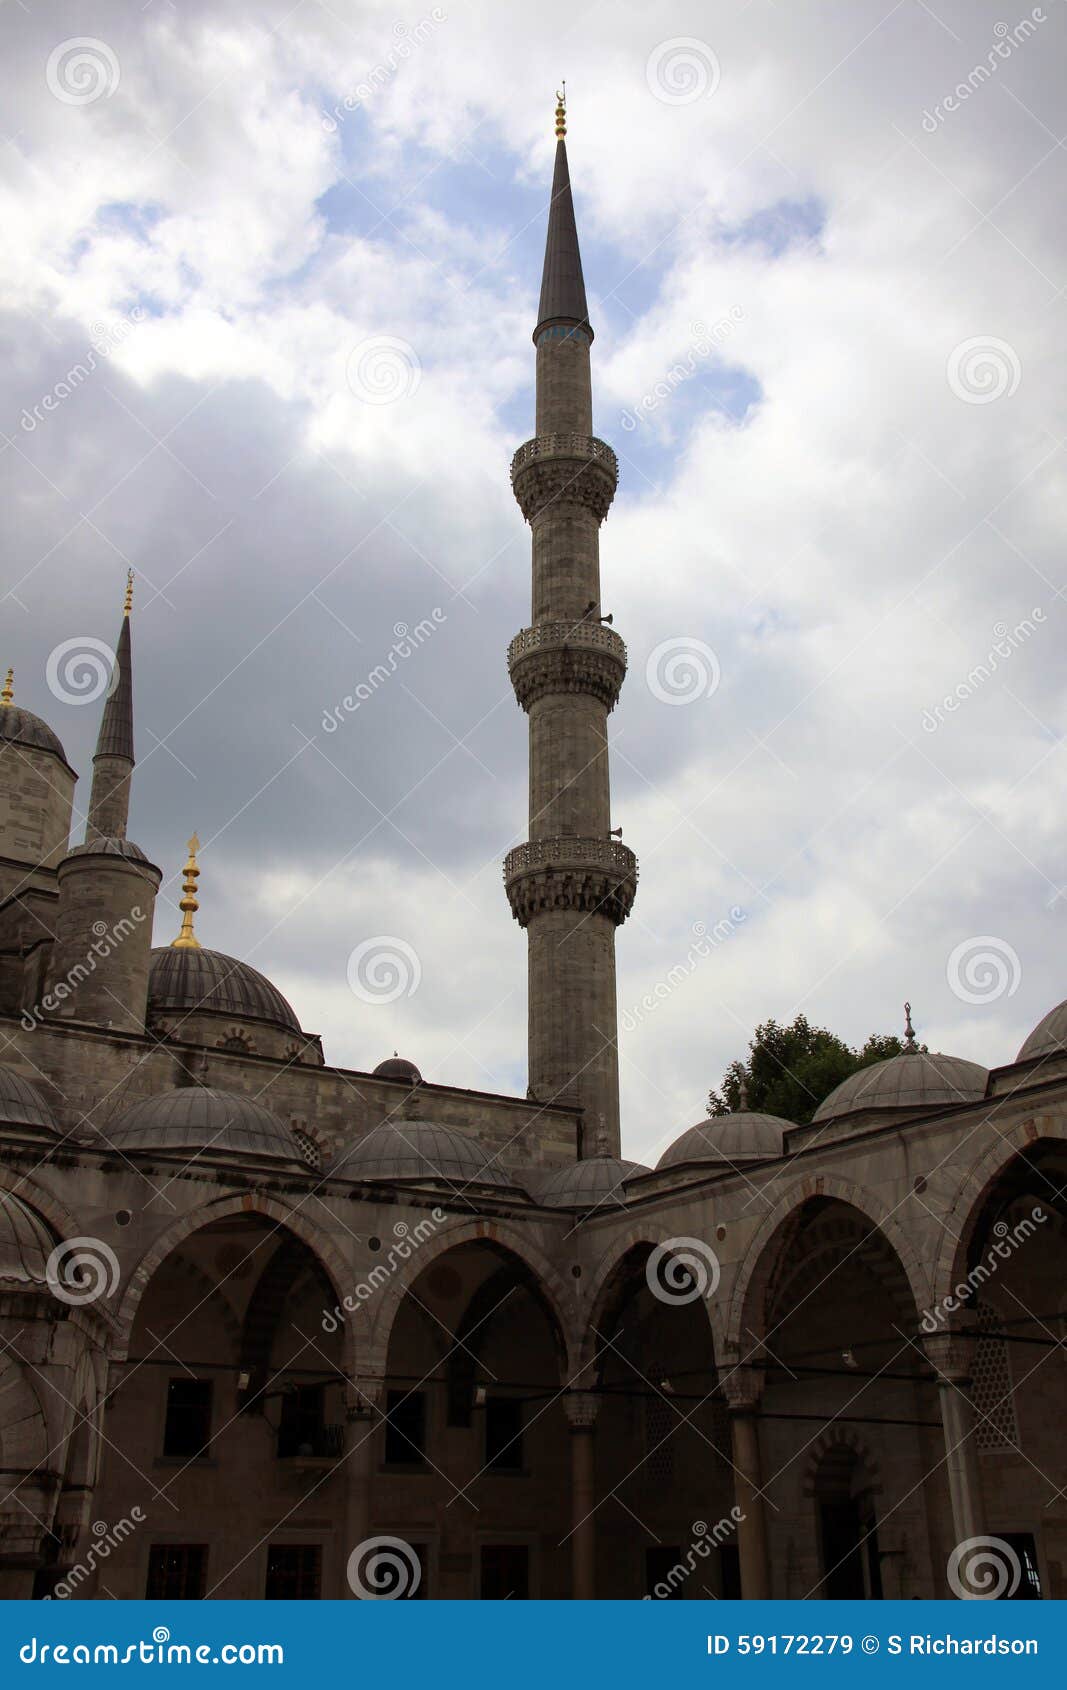 sultan ahmed mosque and minarete